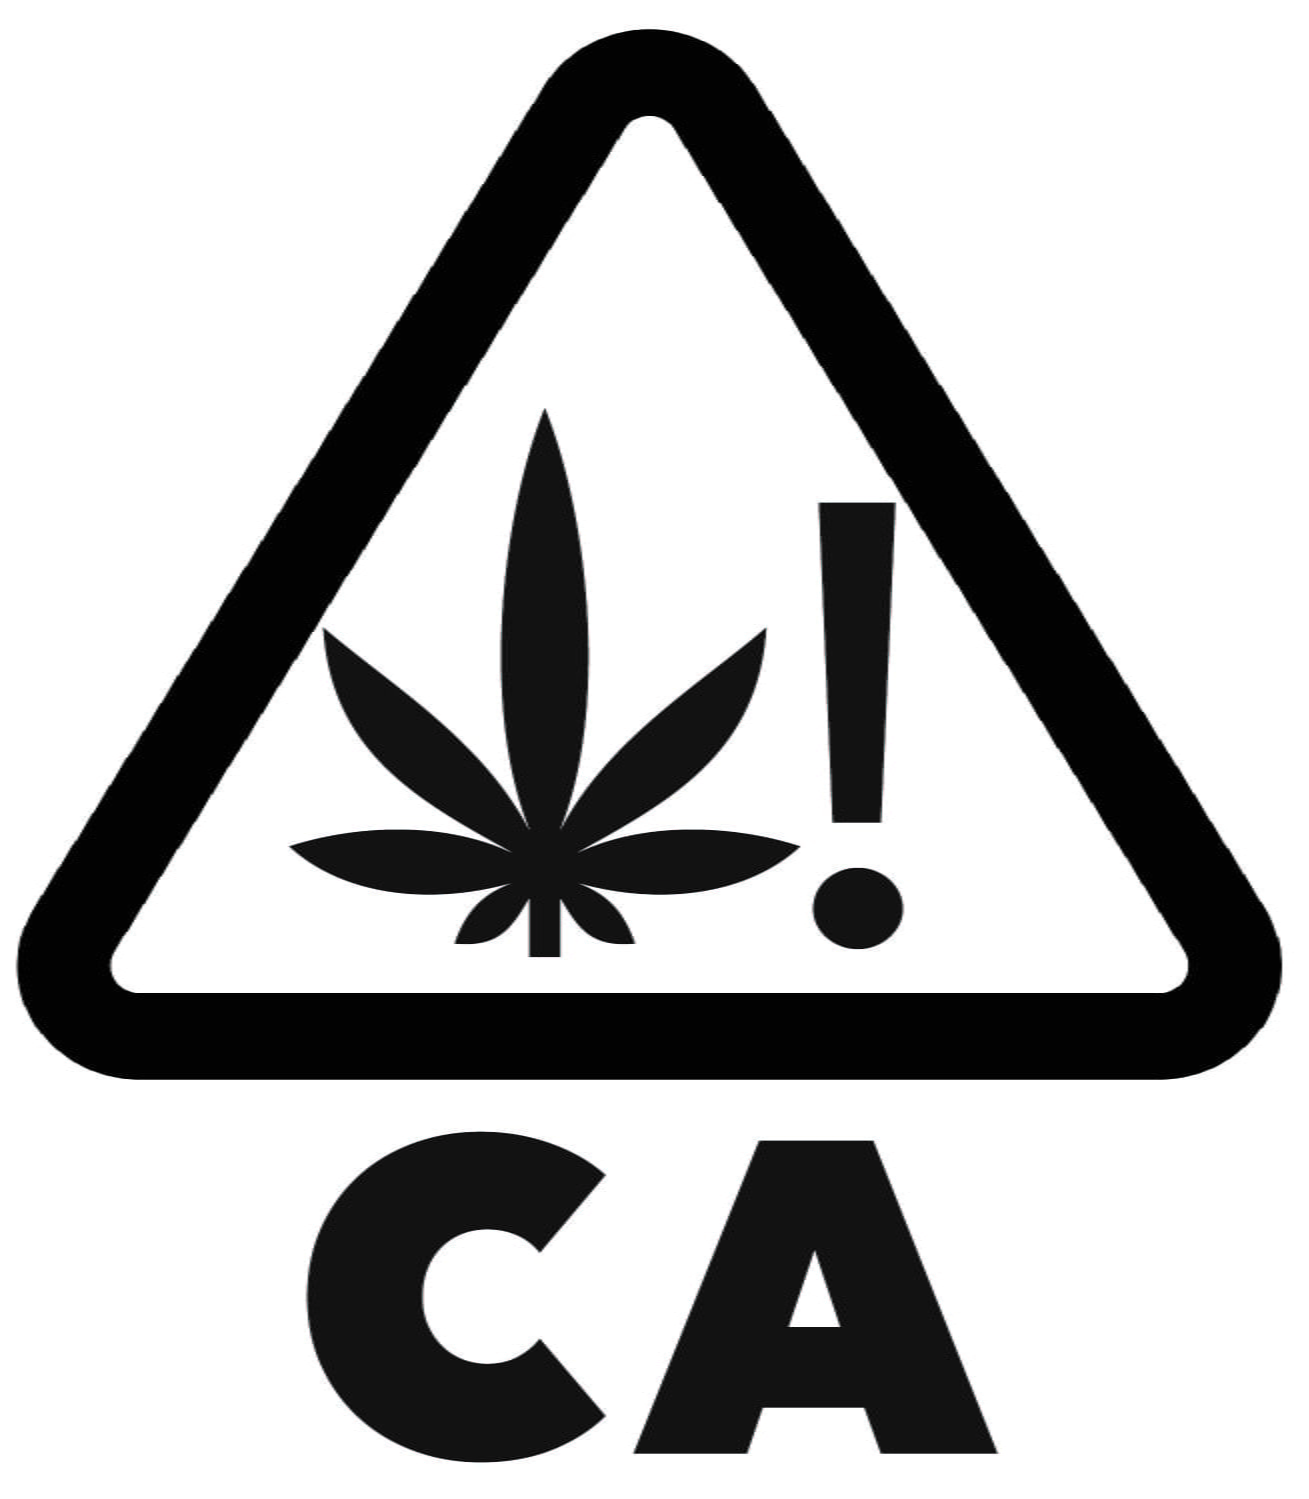 California Universal Symbols